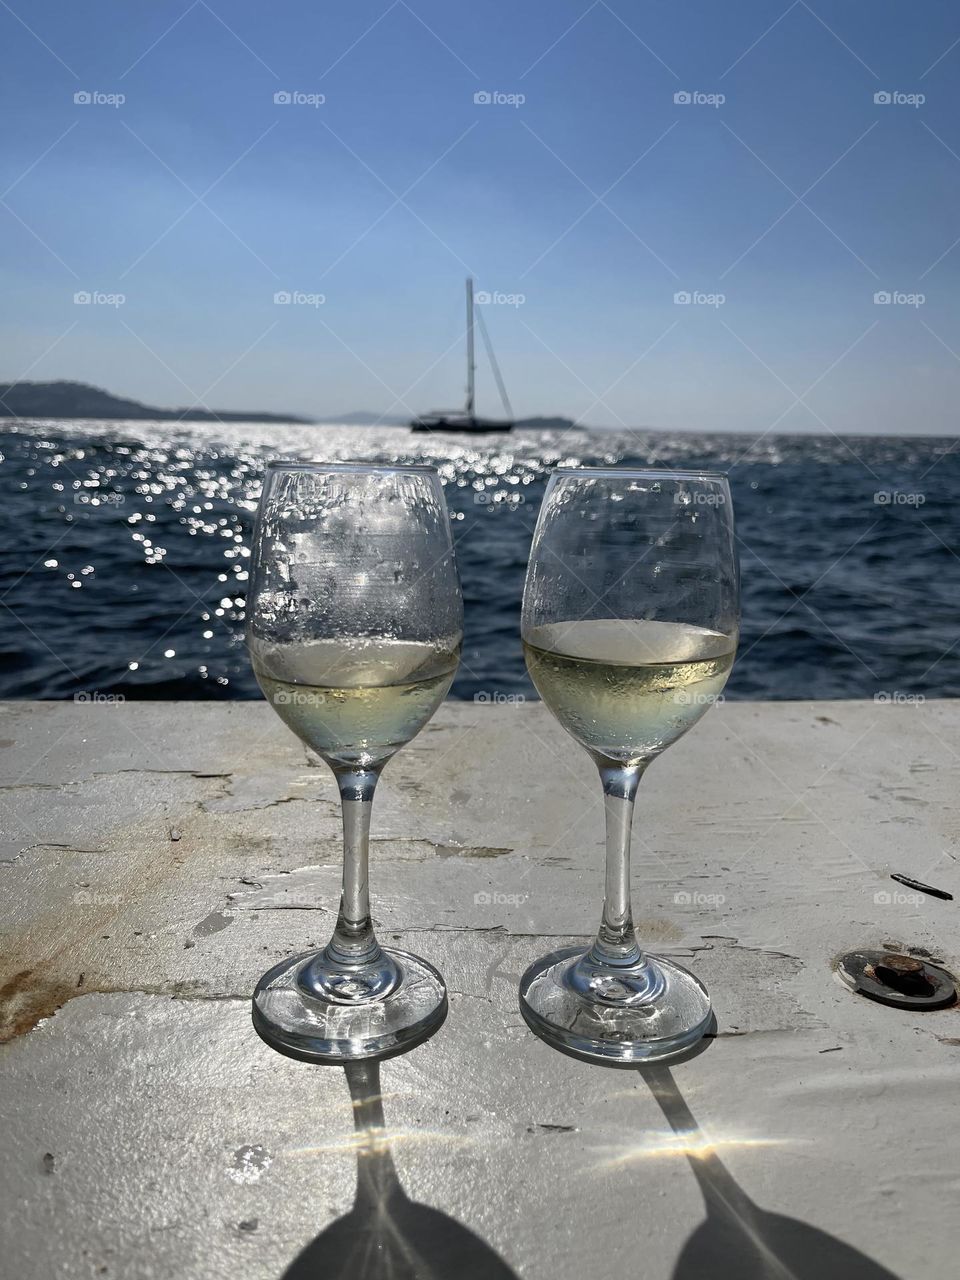 Wine glasses and the Aegean Sea.